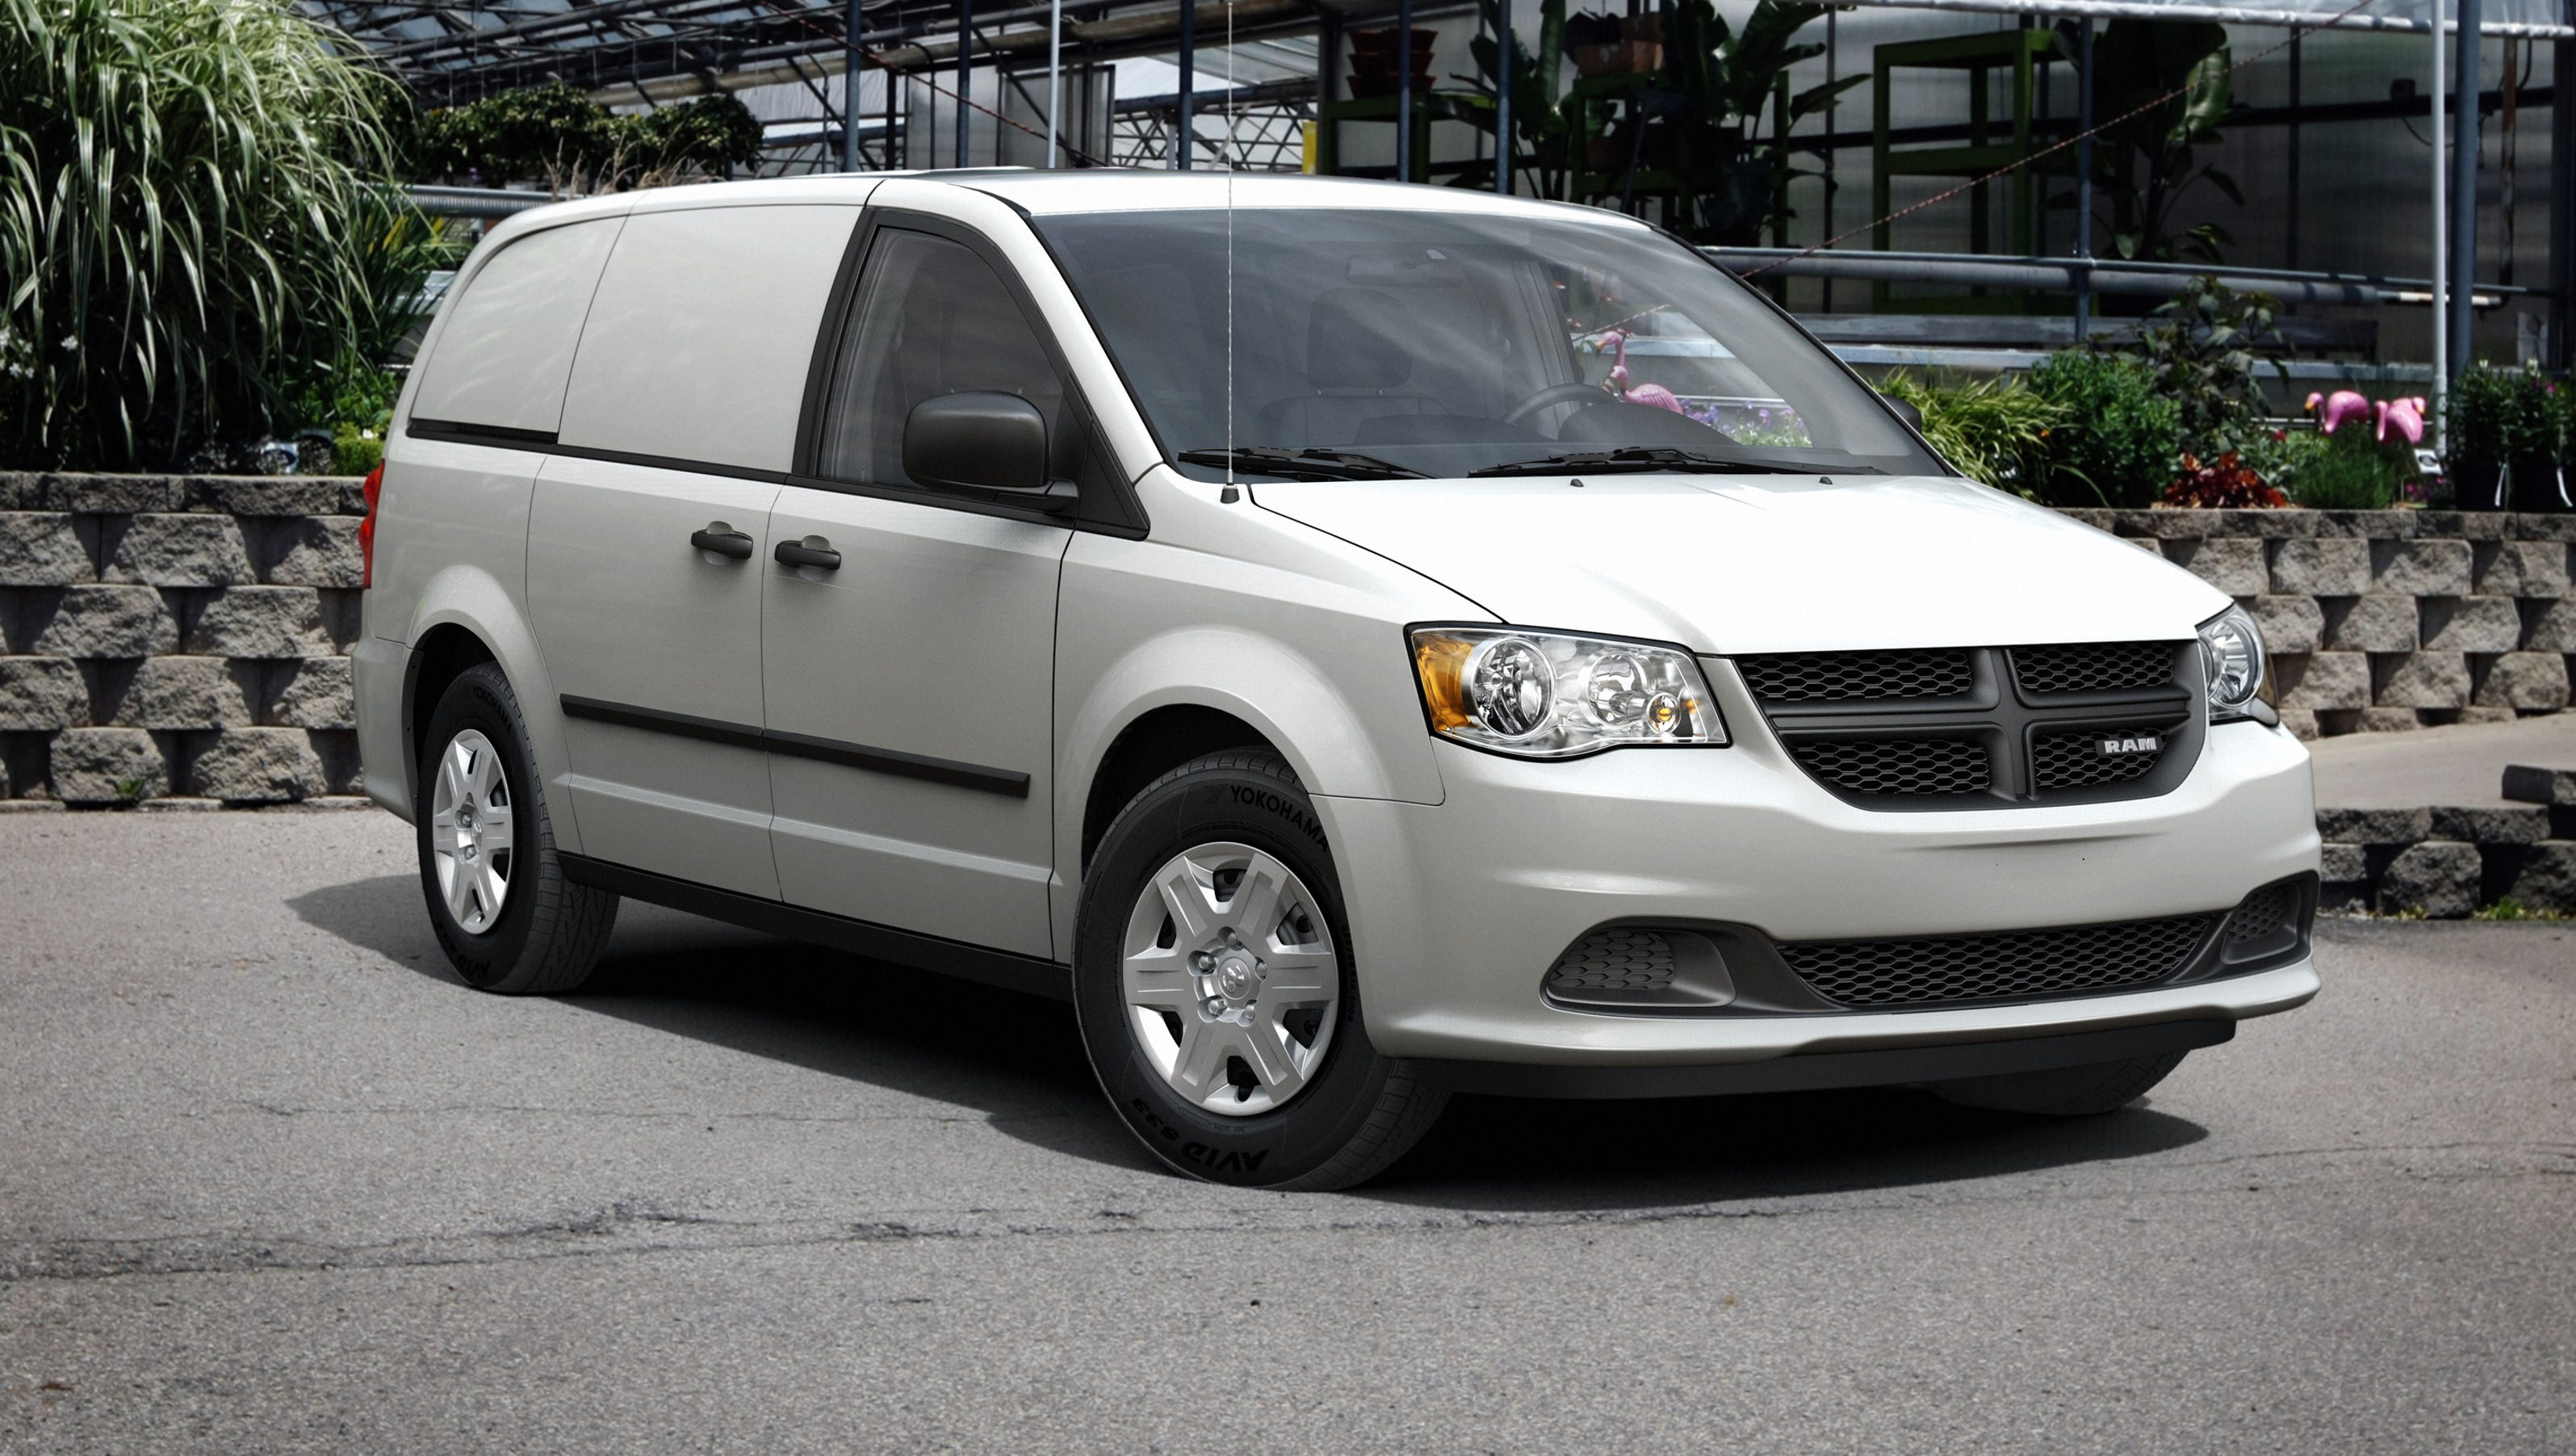 Chrysler minivan recall airbags #1